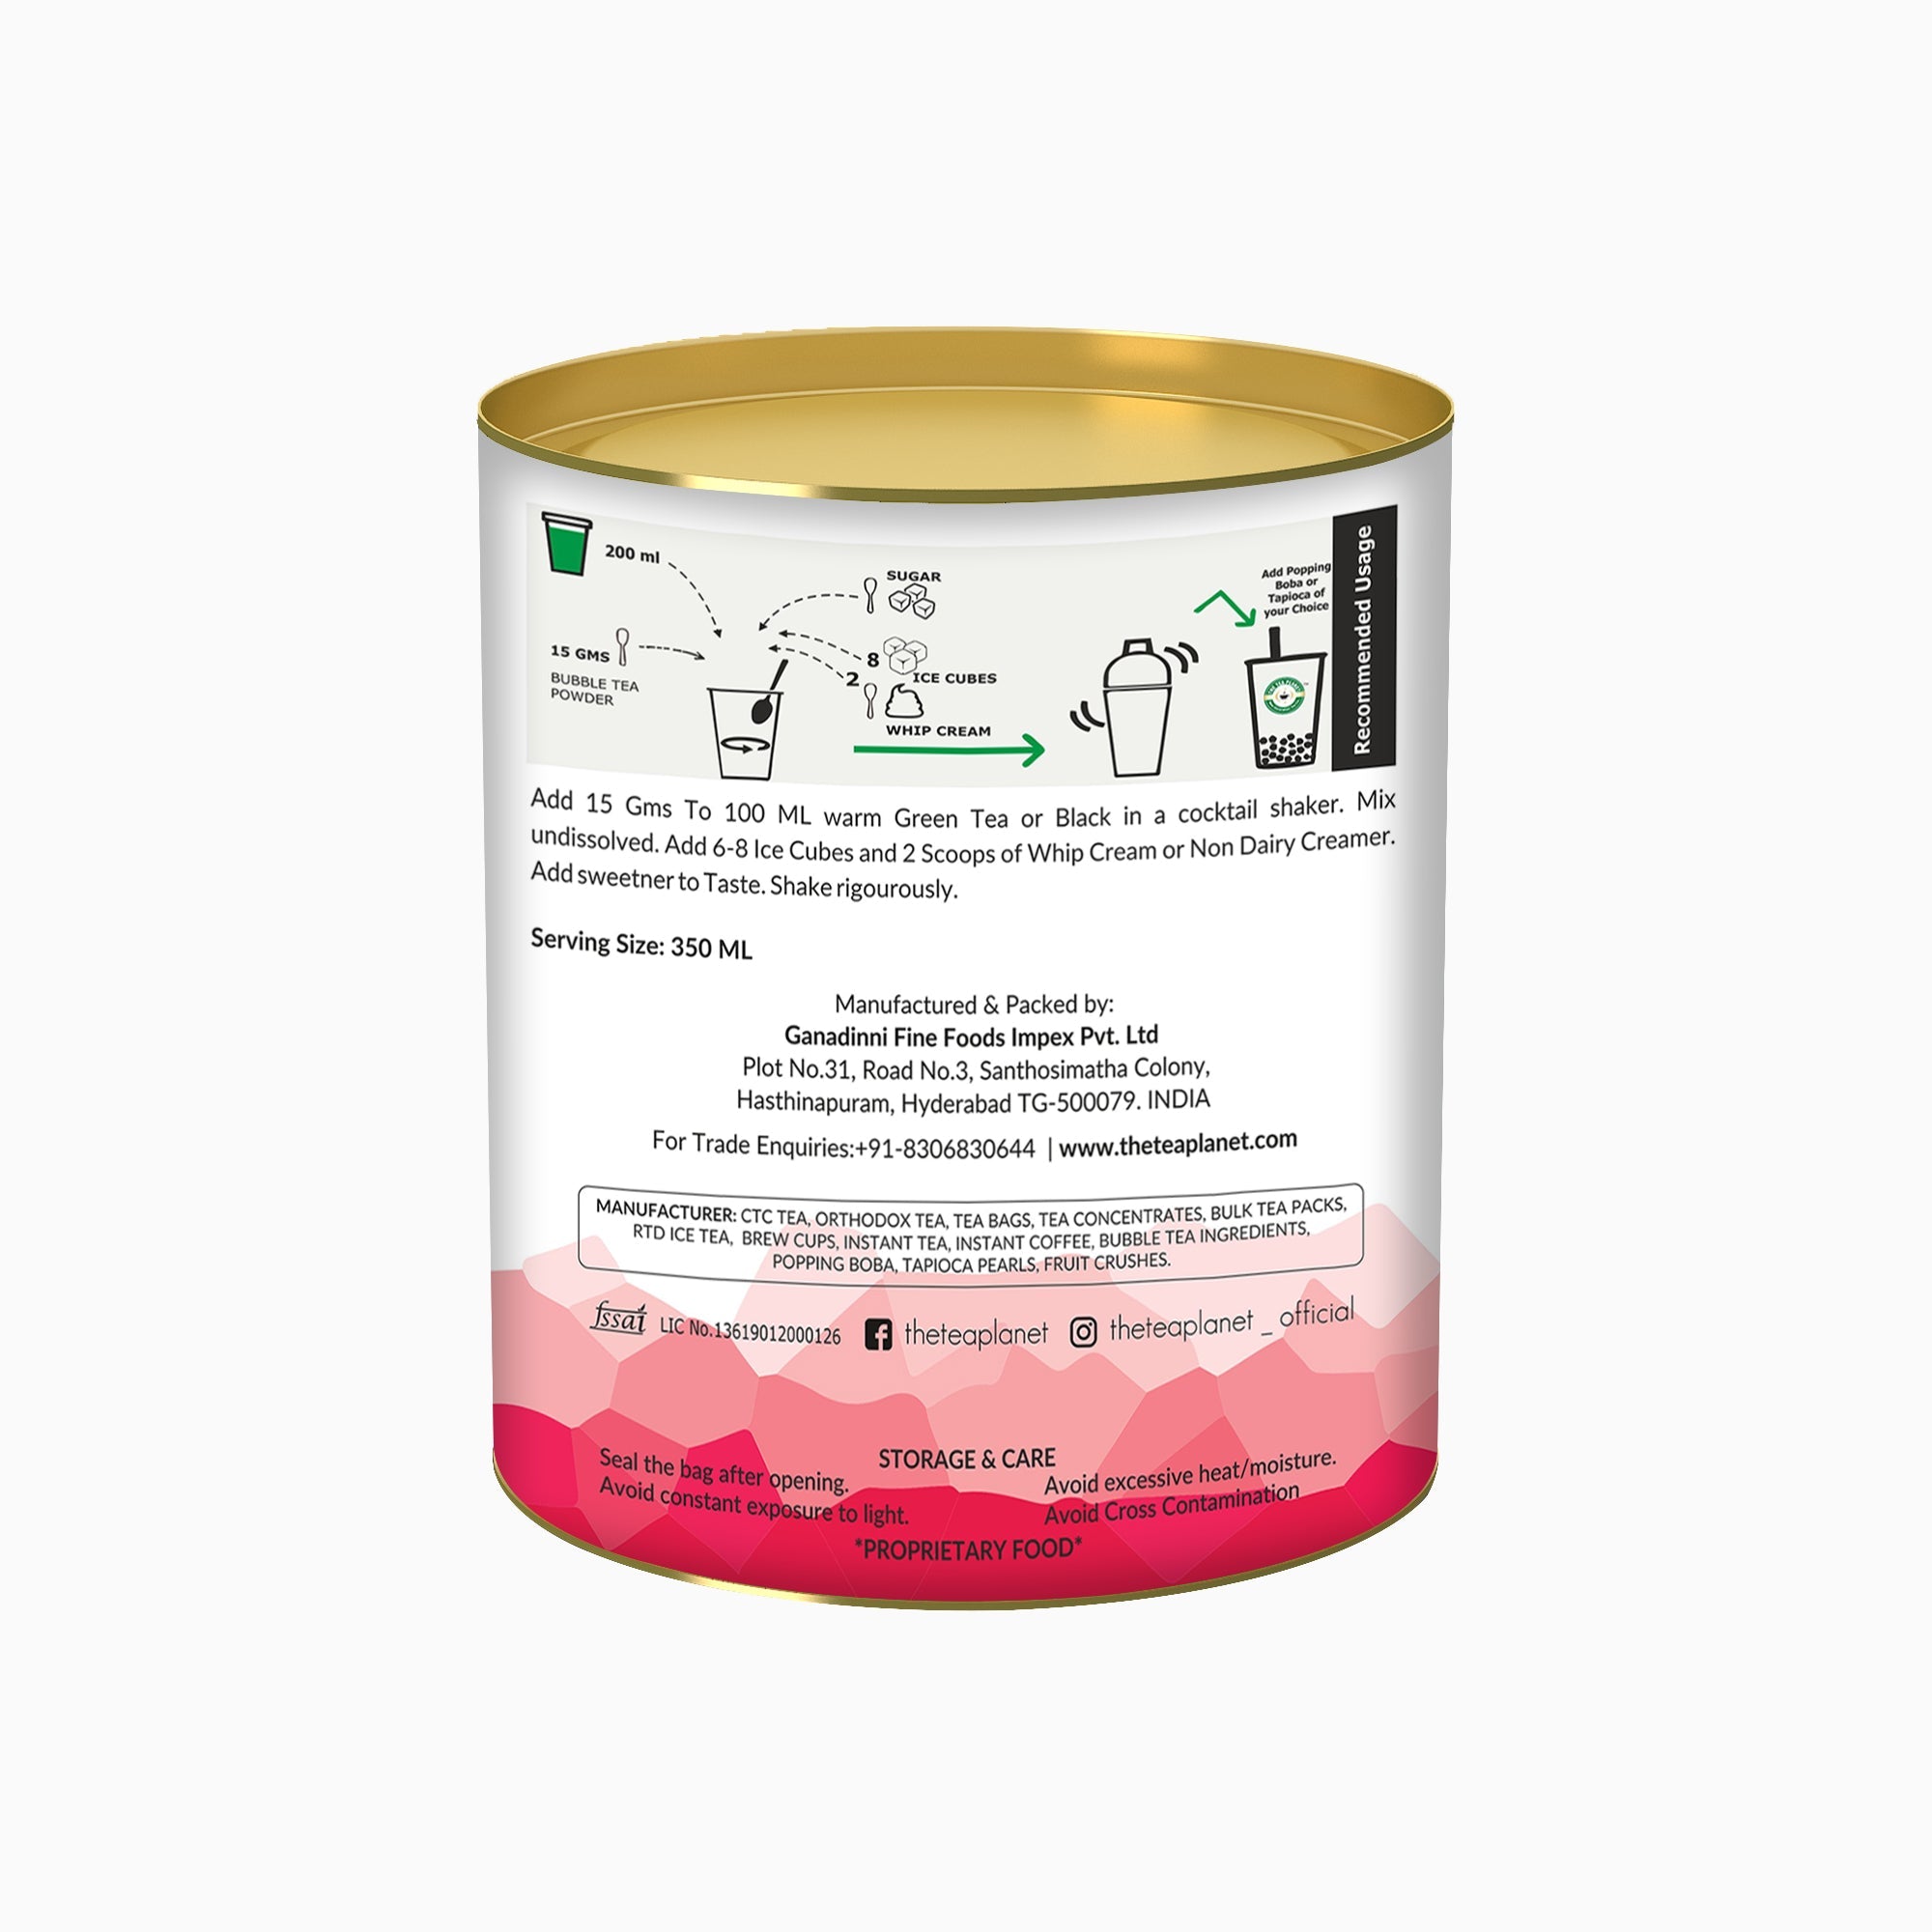 Raspberry Bubble Tea Premix - 250 gms